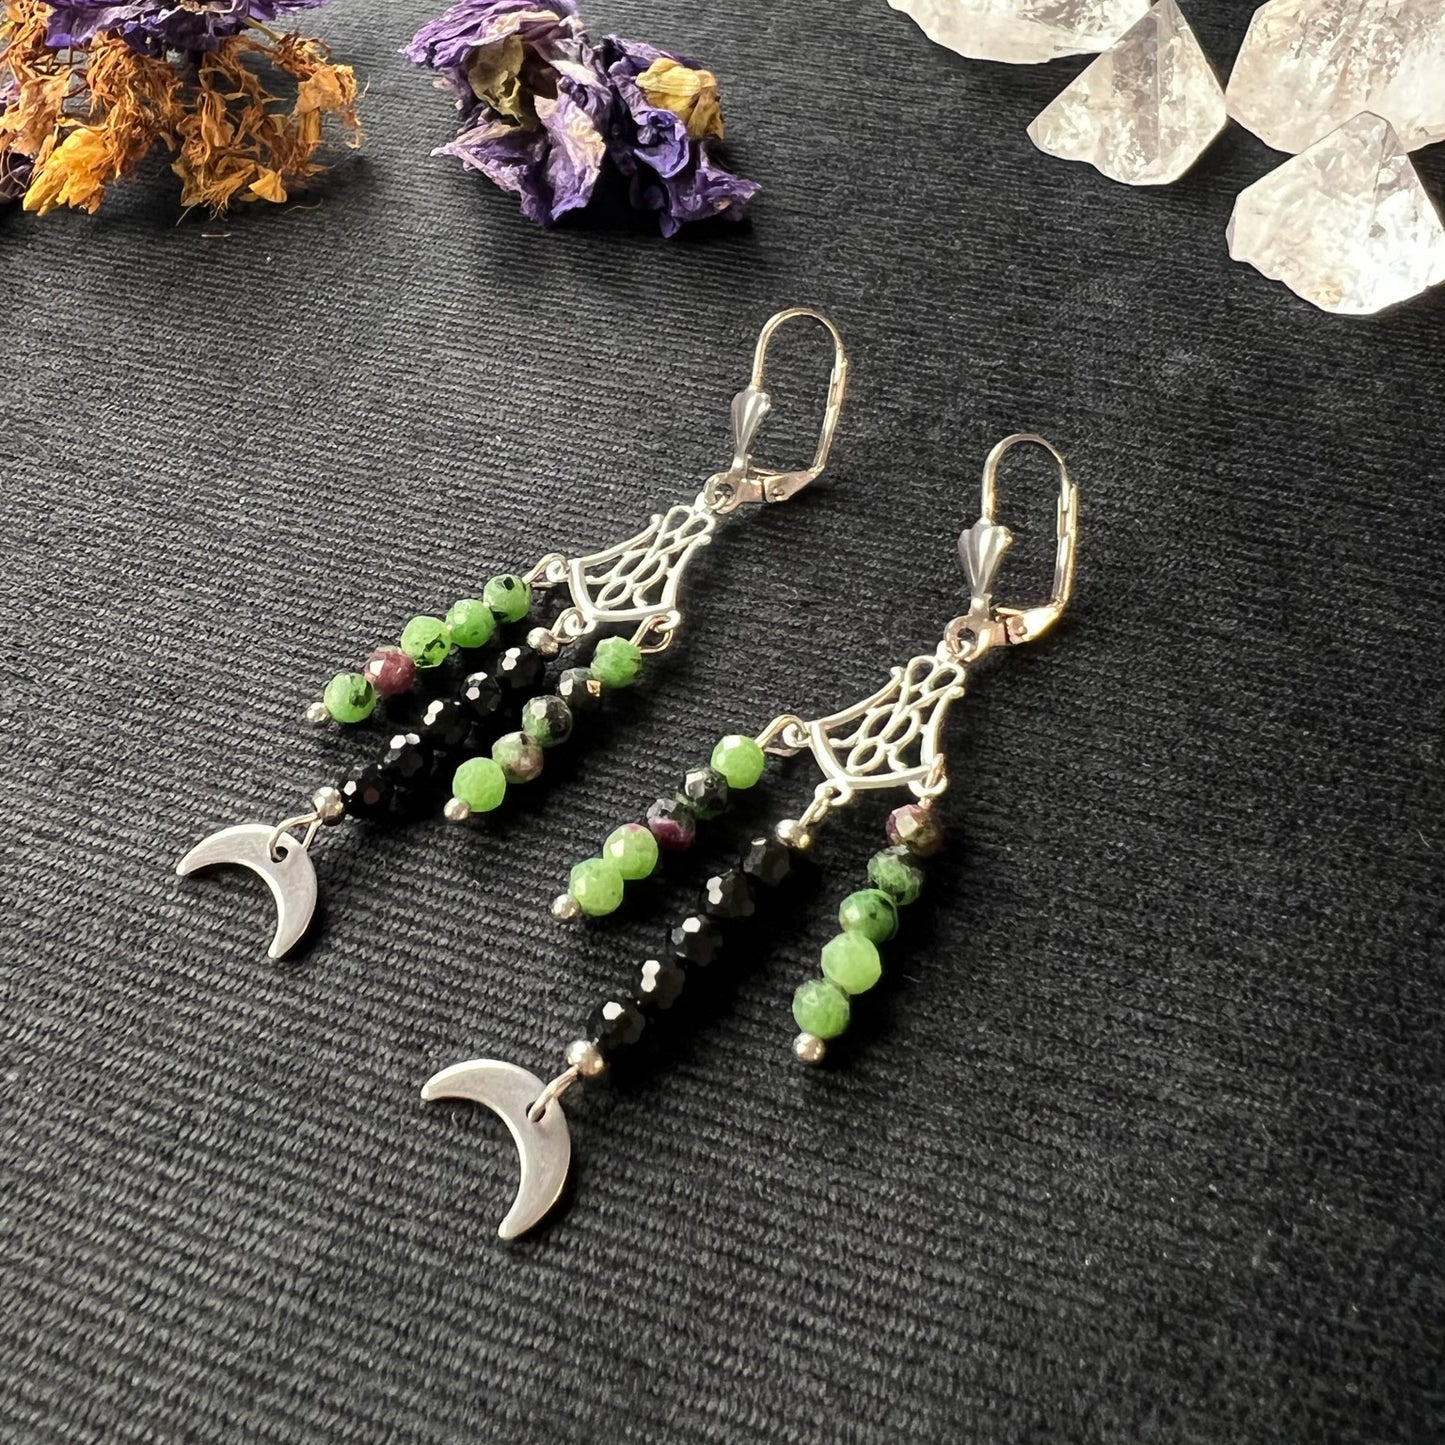 Chandelier art deco earrings Onyx/Garnet or Onyx/Ruby Zoisite and stainless steel